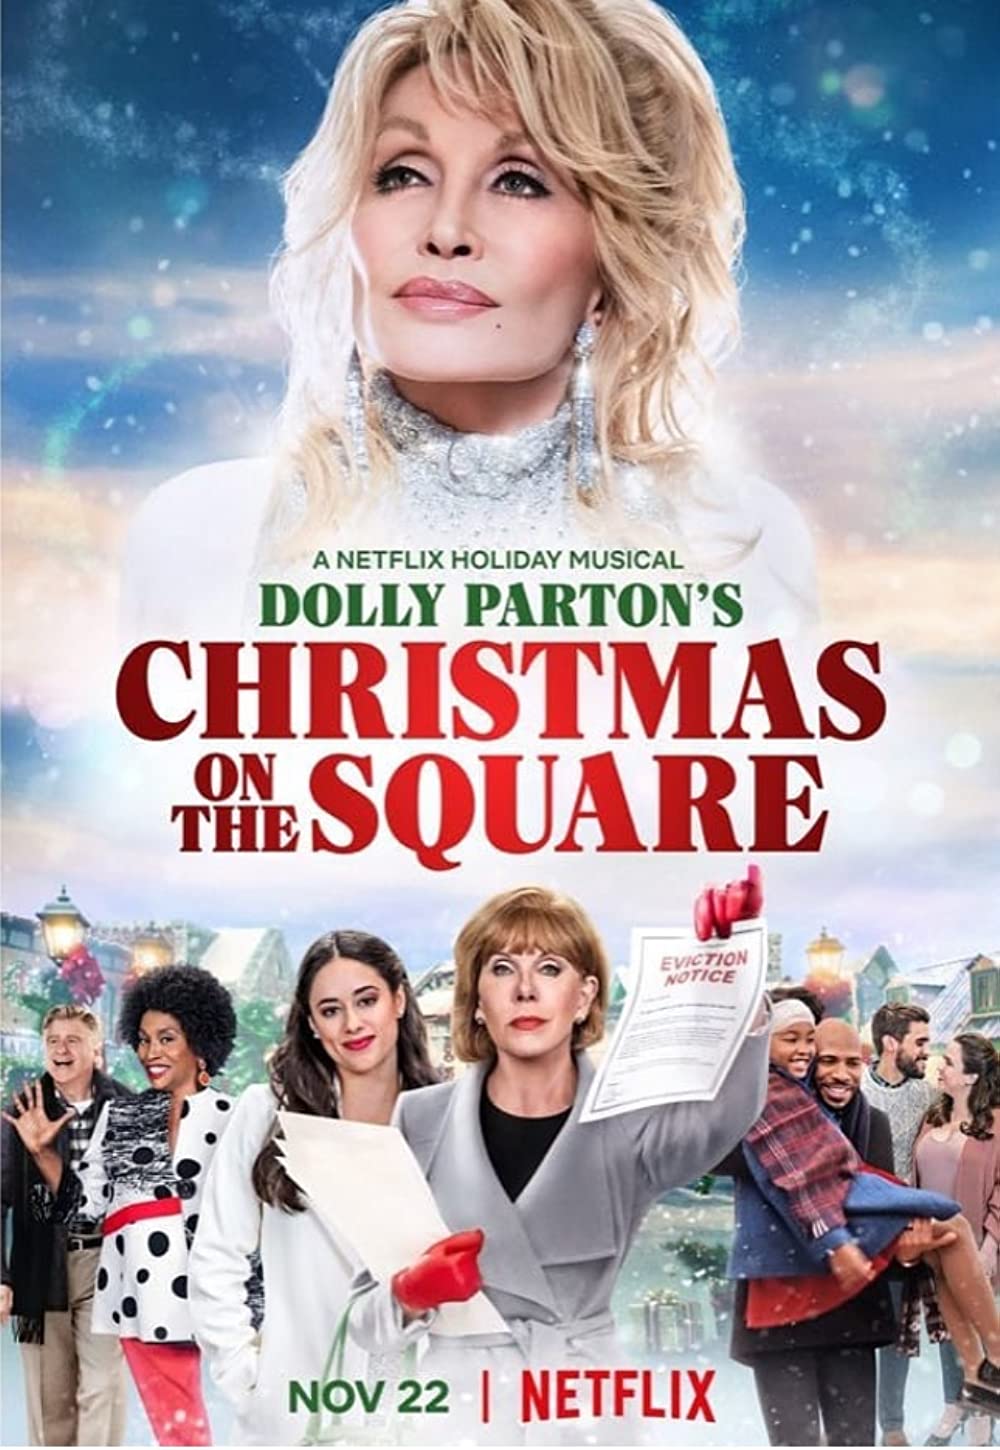 Filmbeschreibung zu Dolly Parton's Christmas on the Square